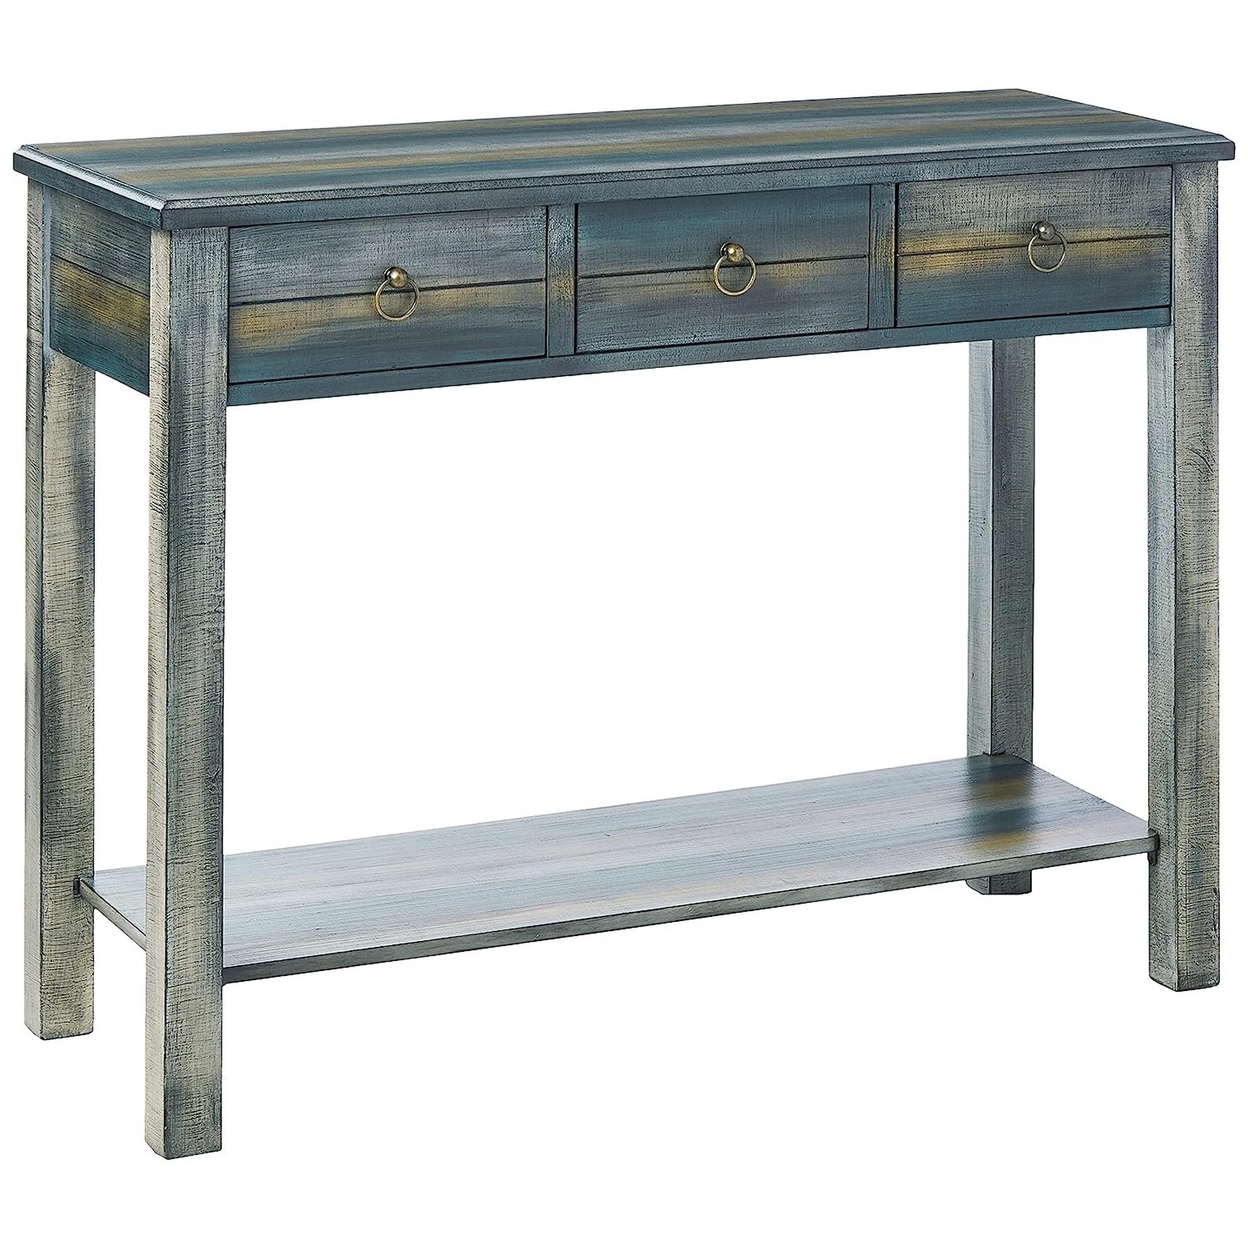 Glancio Beautiful Console Table, Antique Oak & Teal Blue- Saltoro Sherpi